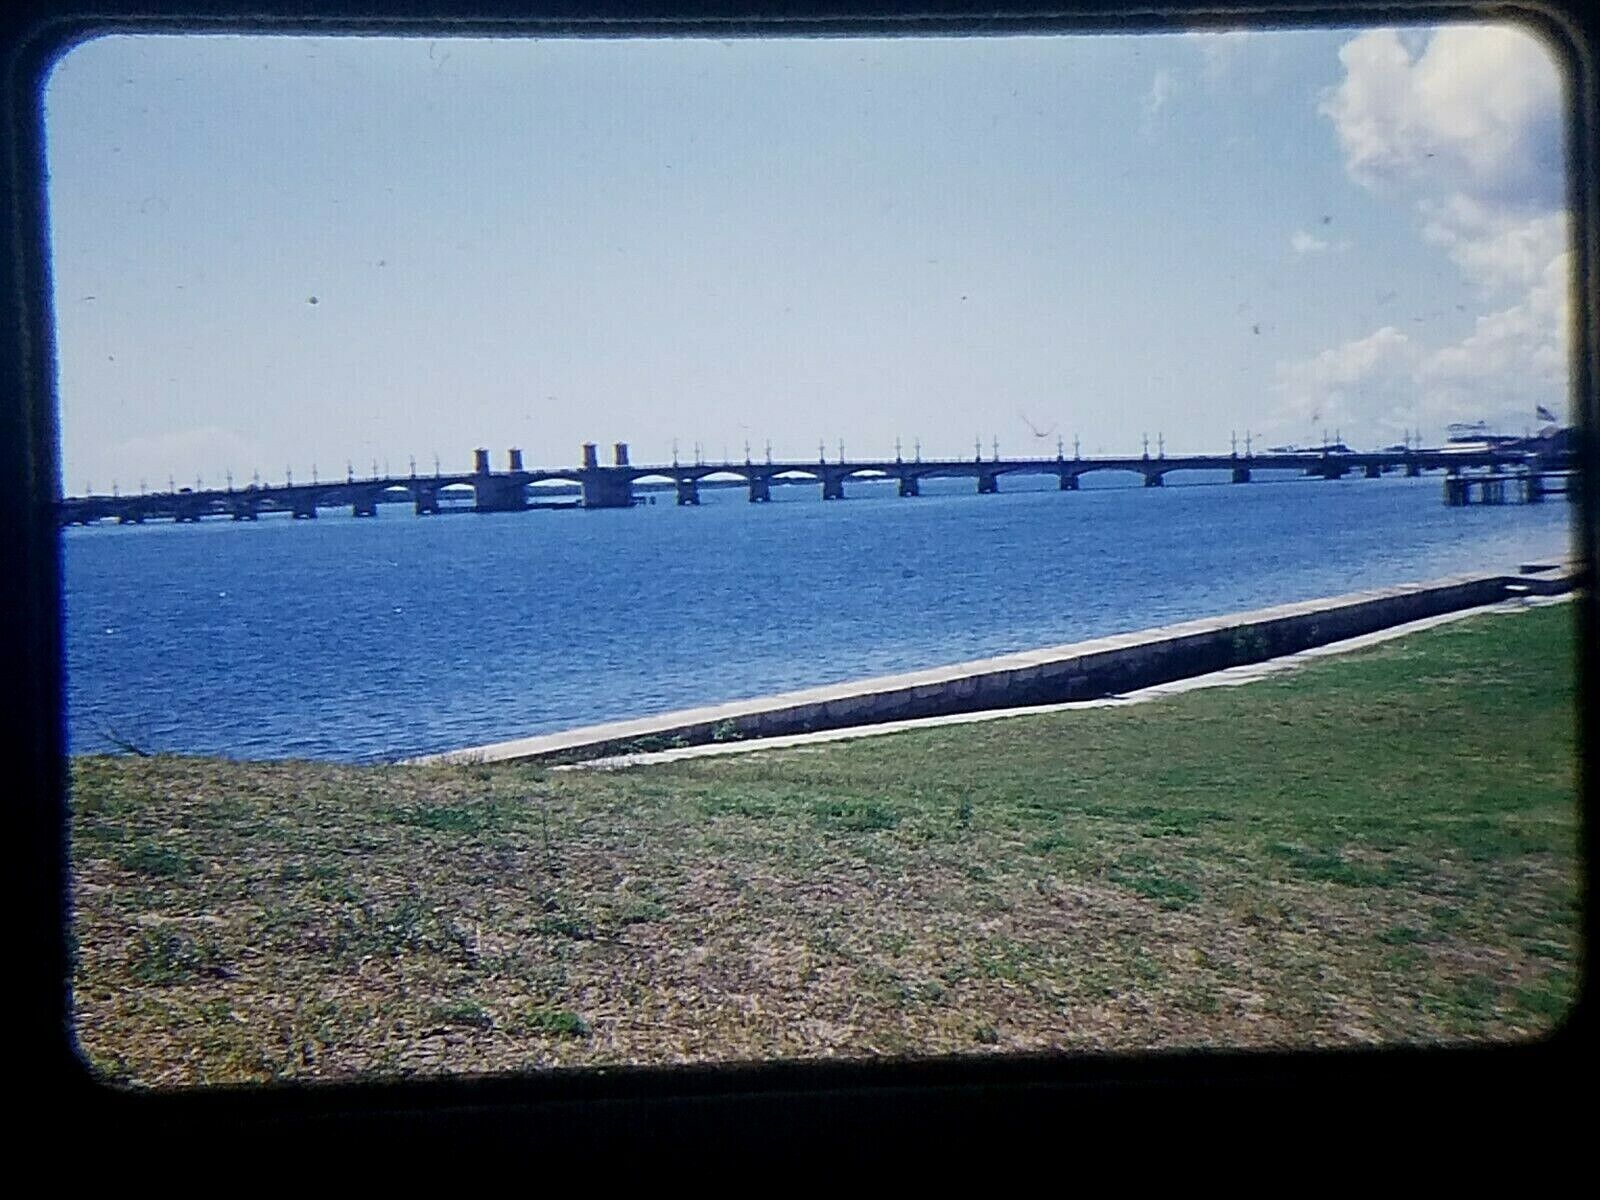 MR18 ORIGINAL KODACHROME 35MM SLIDE 1950s LONG BRIDGE IN FLORIDA